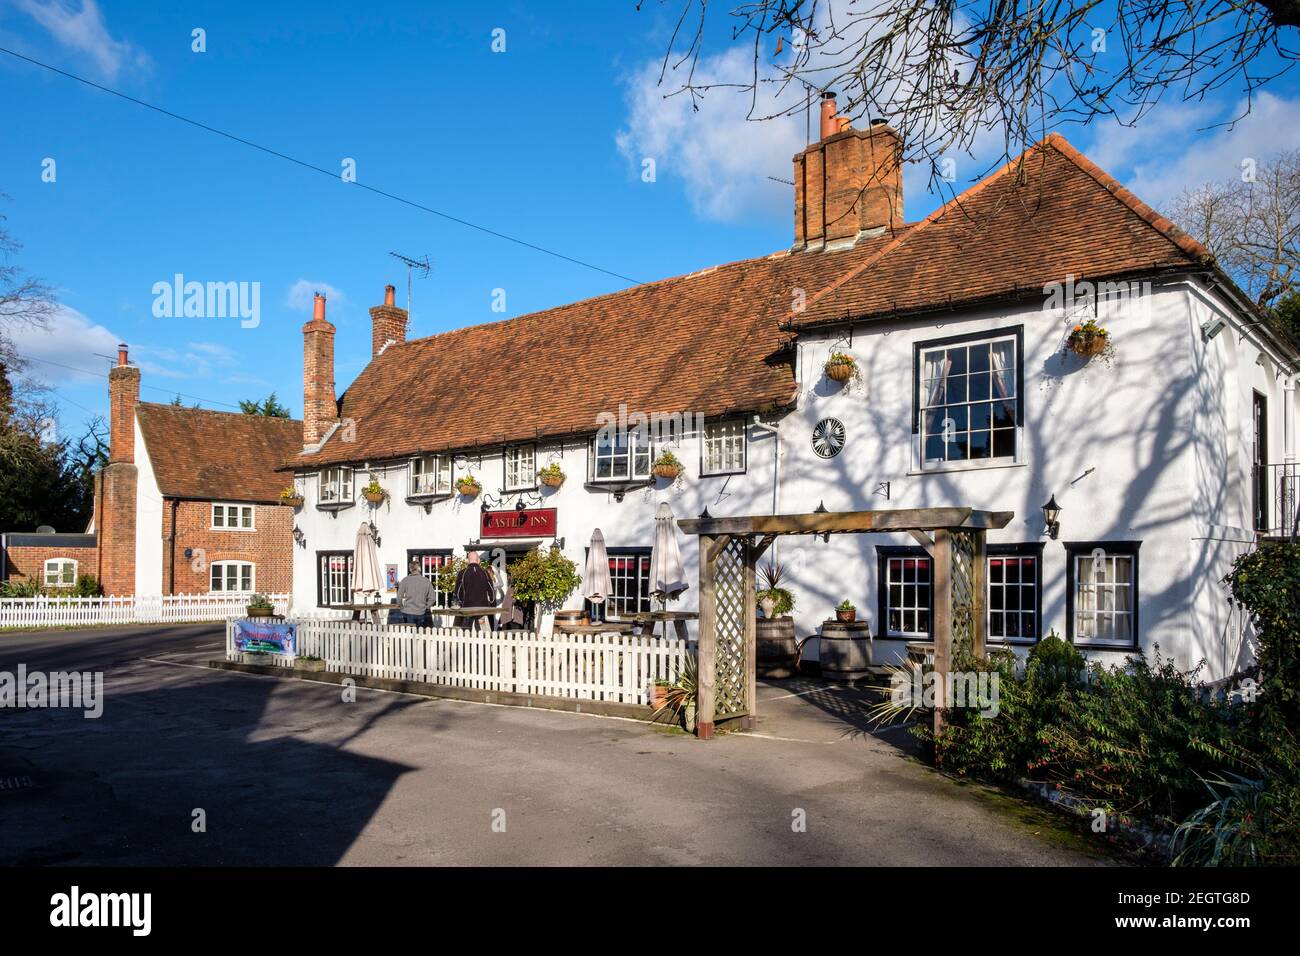 Castle Inn pub, Hurst, Twyford, Berkshire, England, GB, UK Stock Photo